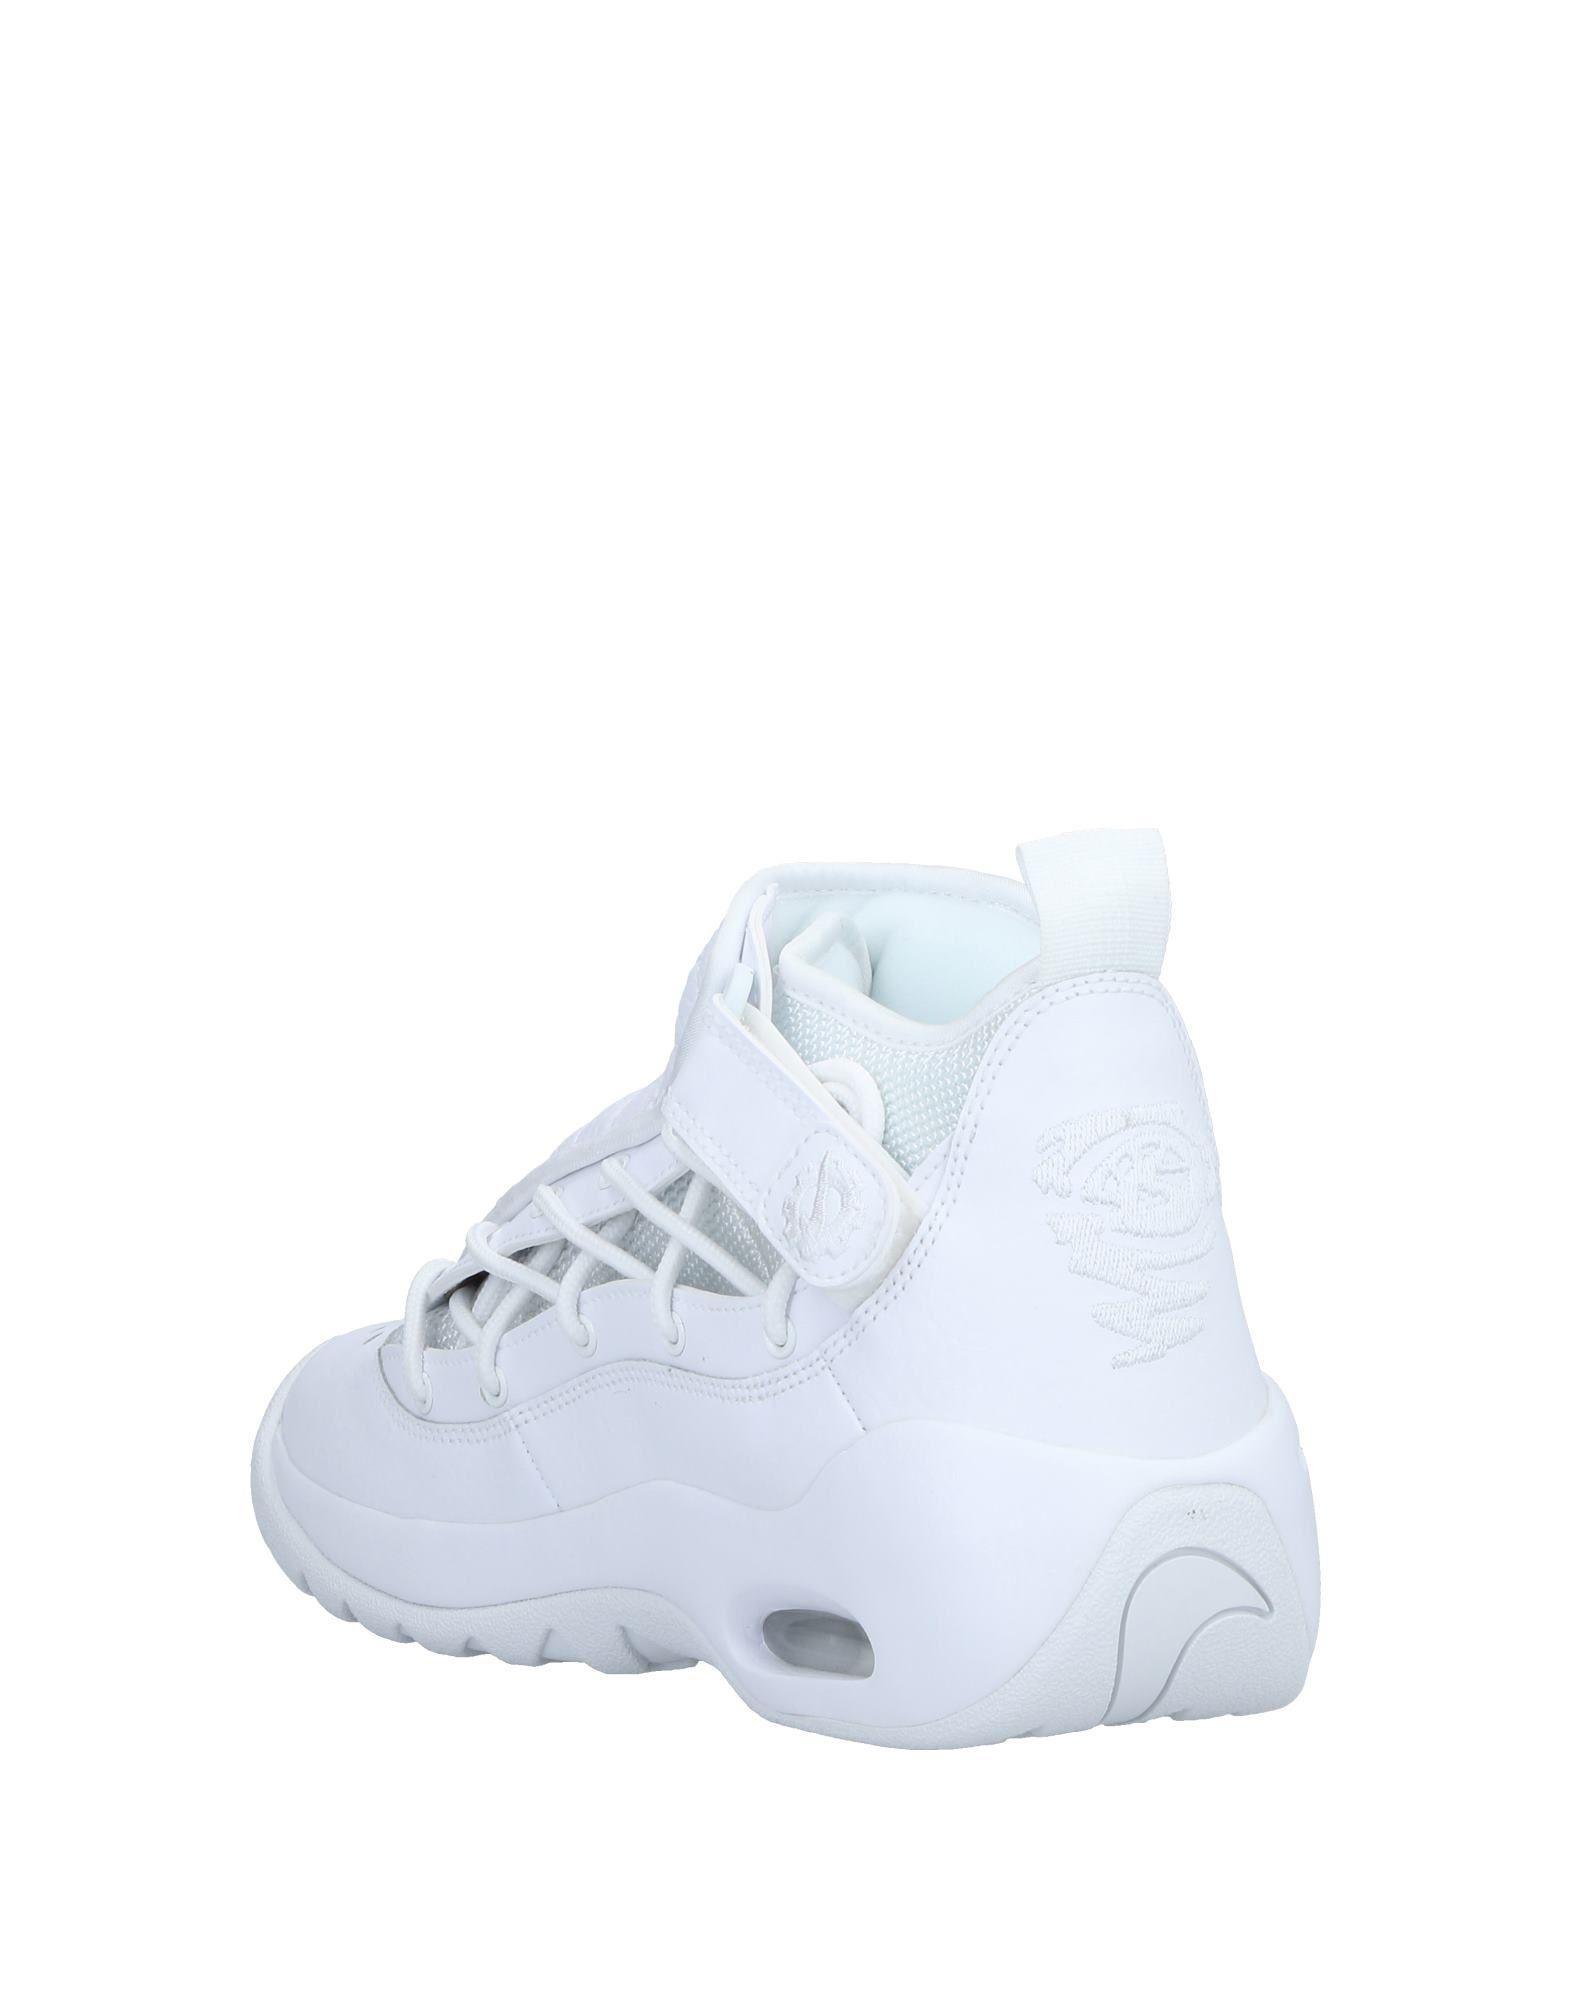 Liberty Of London X Nike Air Max 1 (Bourton) Sneaker Freaker para barato  nmYwpBZ7 - torrecaneque.es